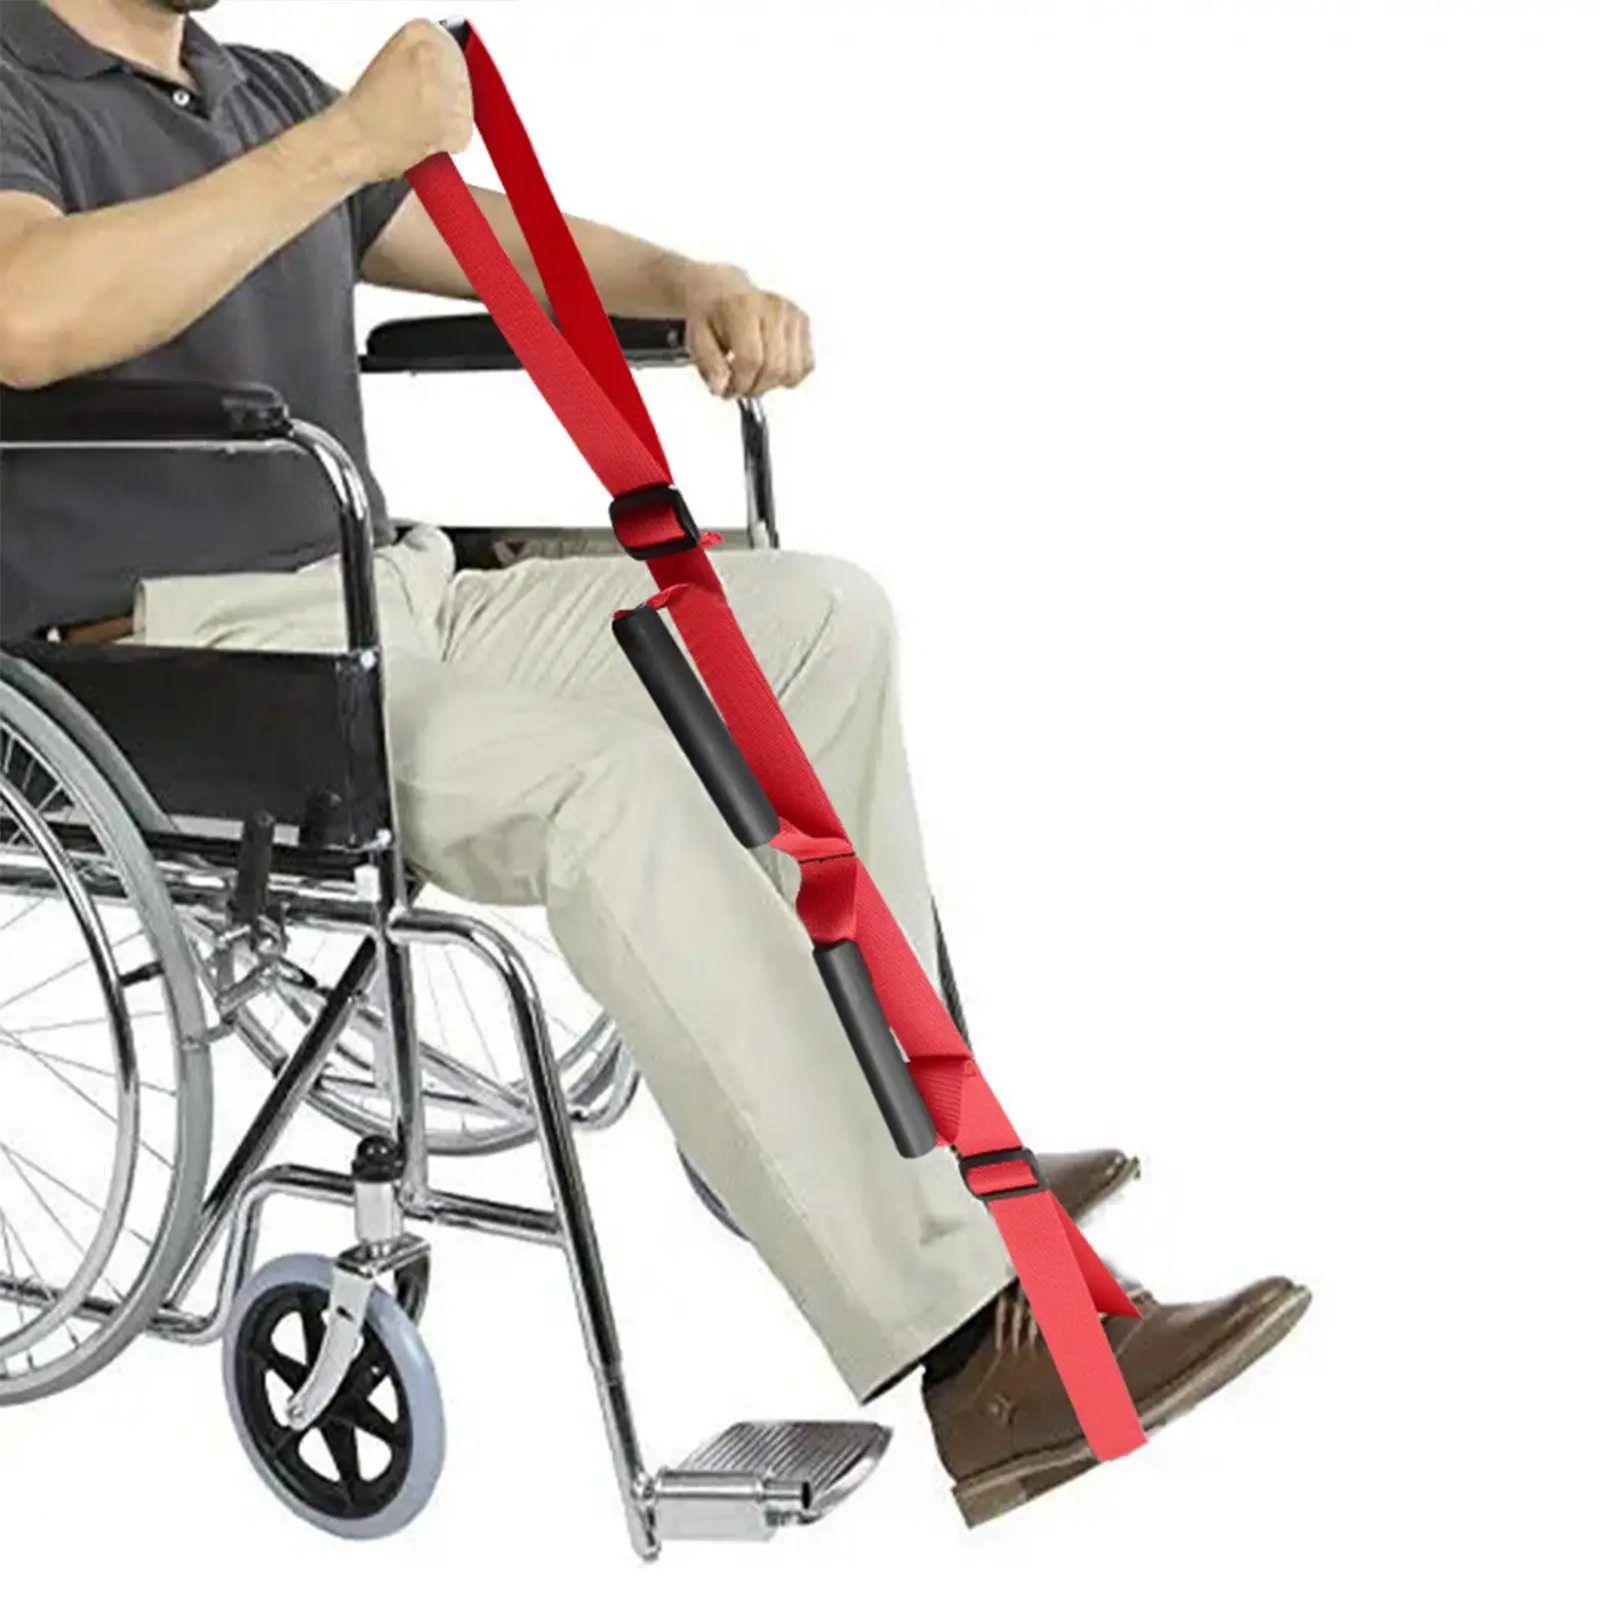 35inch Long Leg Lifter Strap Adjustable Lift Leg Foot Loop for Seniors